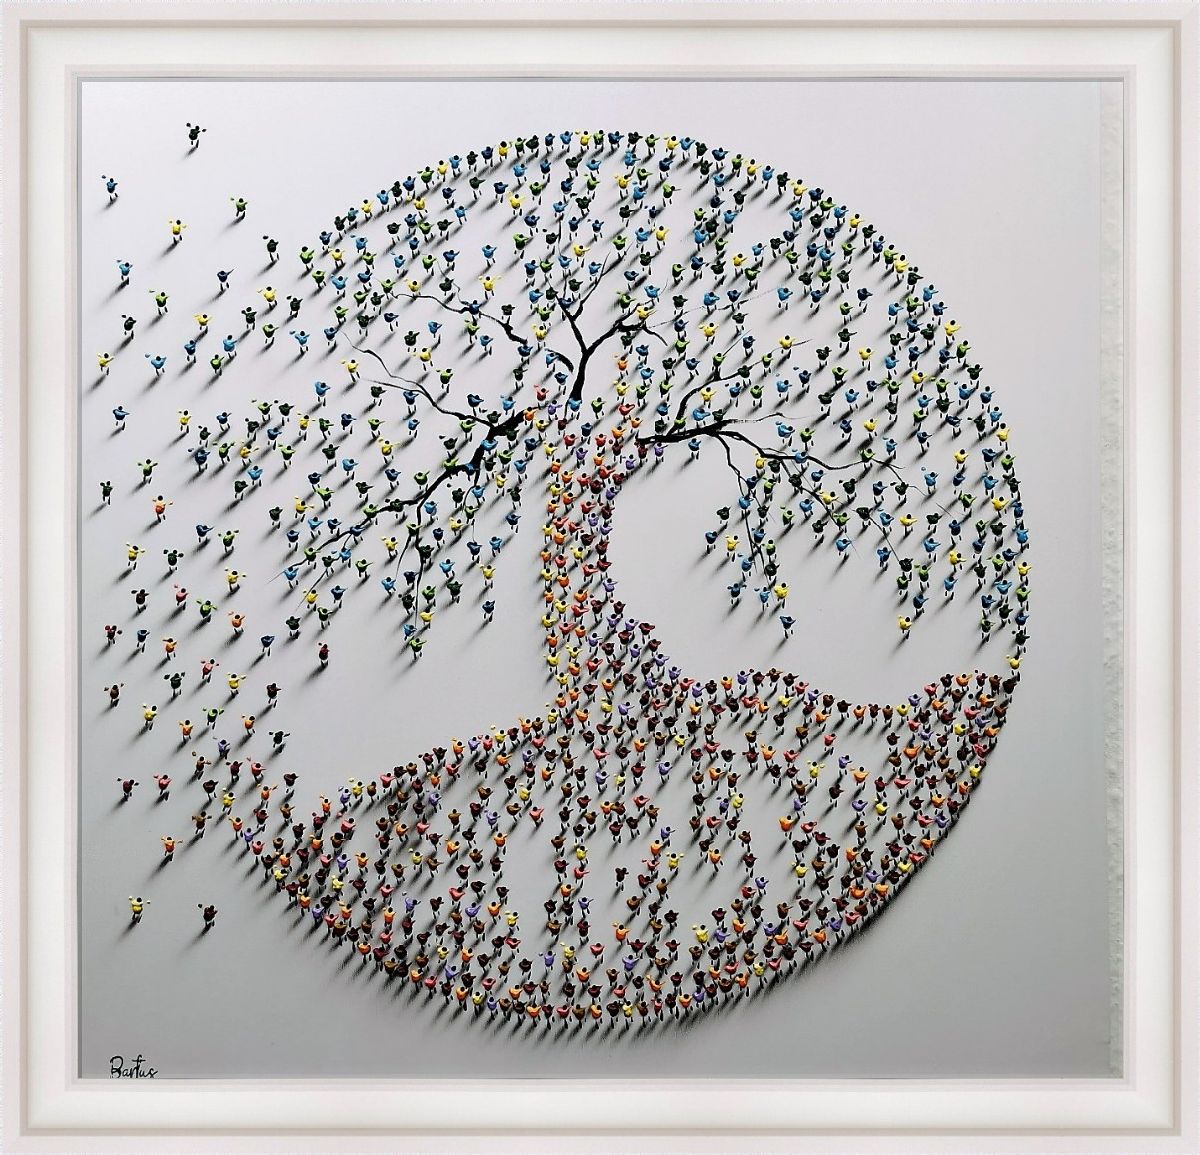 Tree of Life by Francisco Bartus